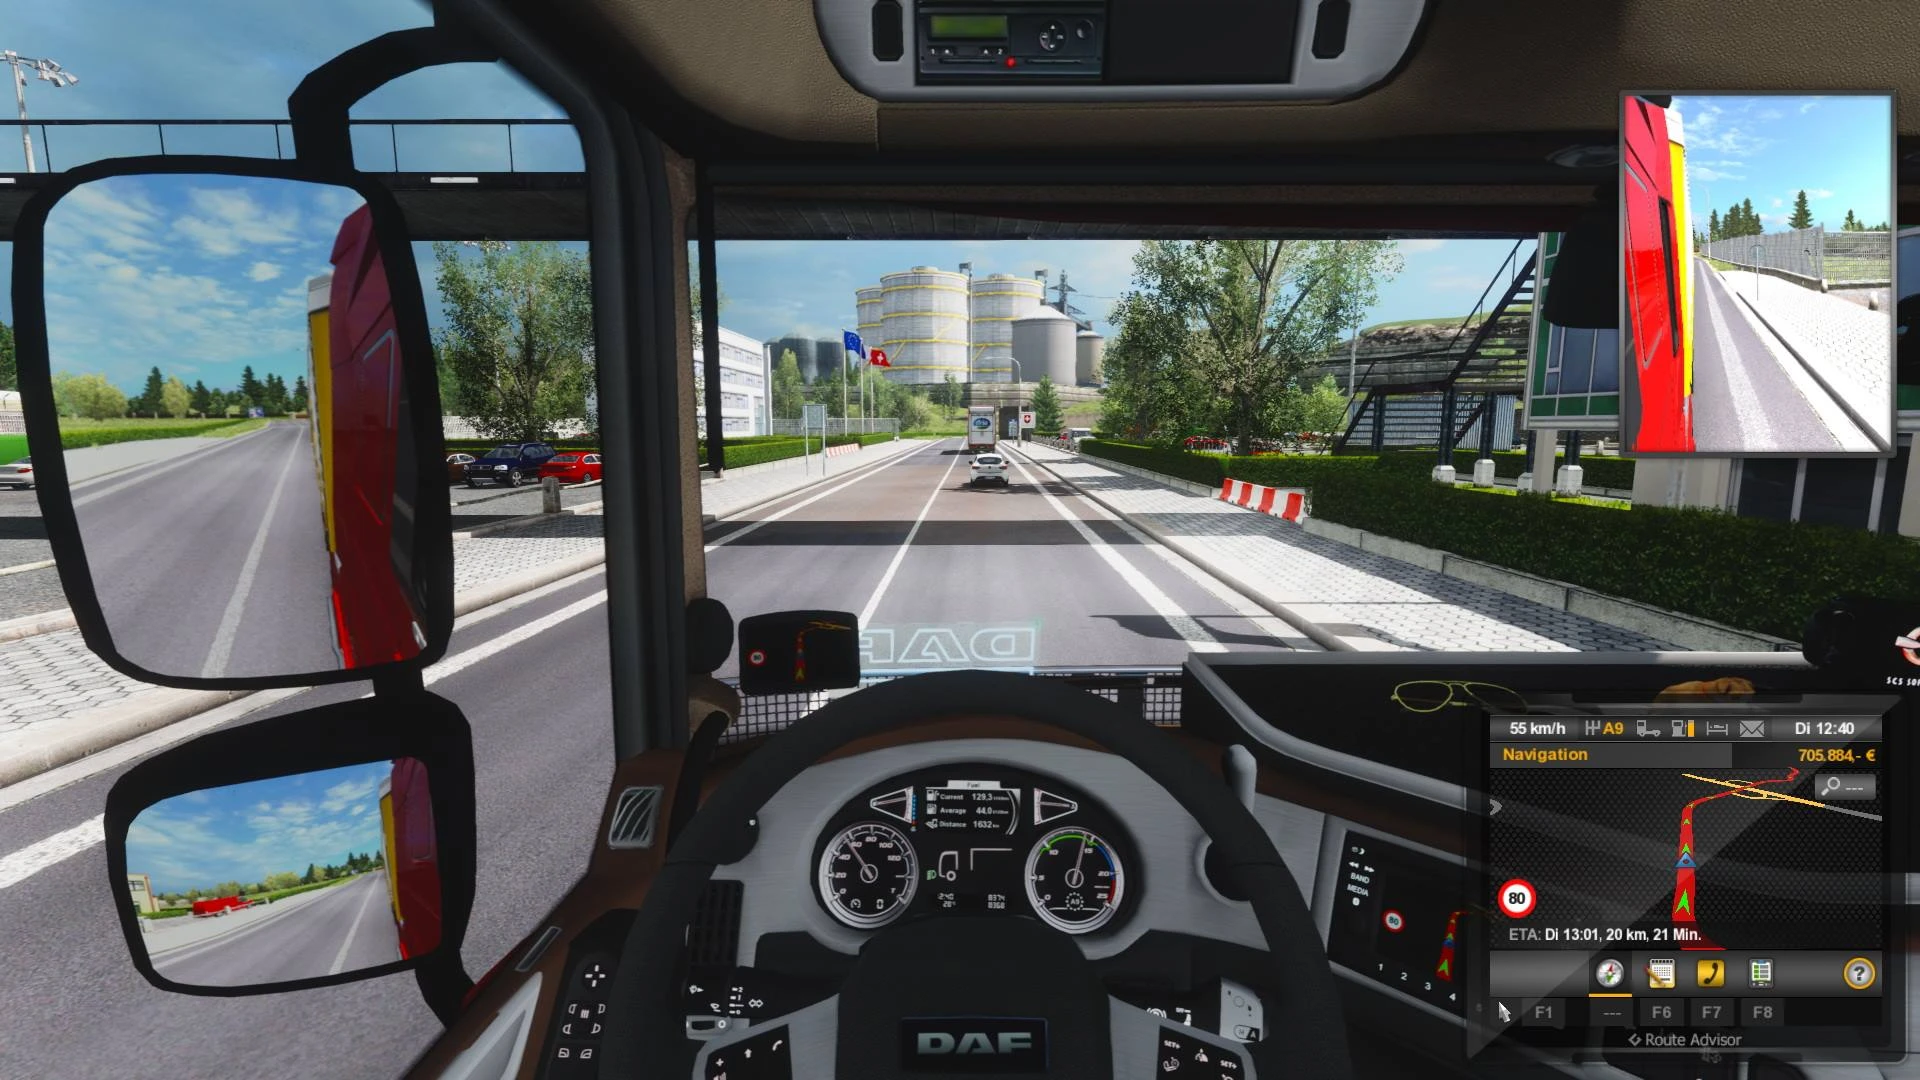 euro truck simulator 2 enb